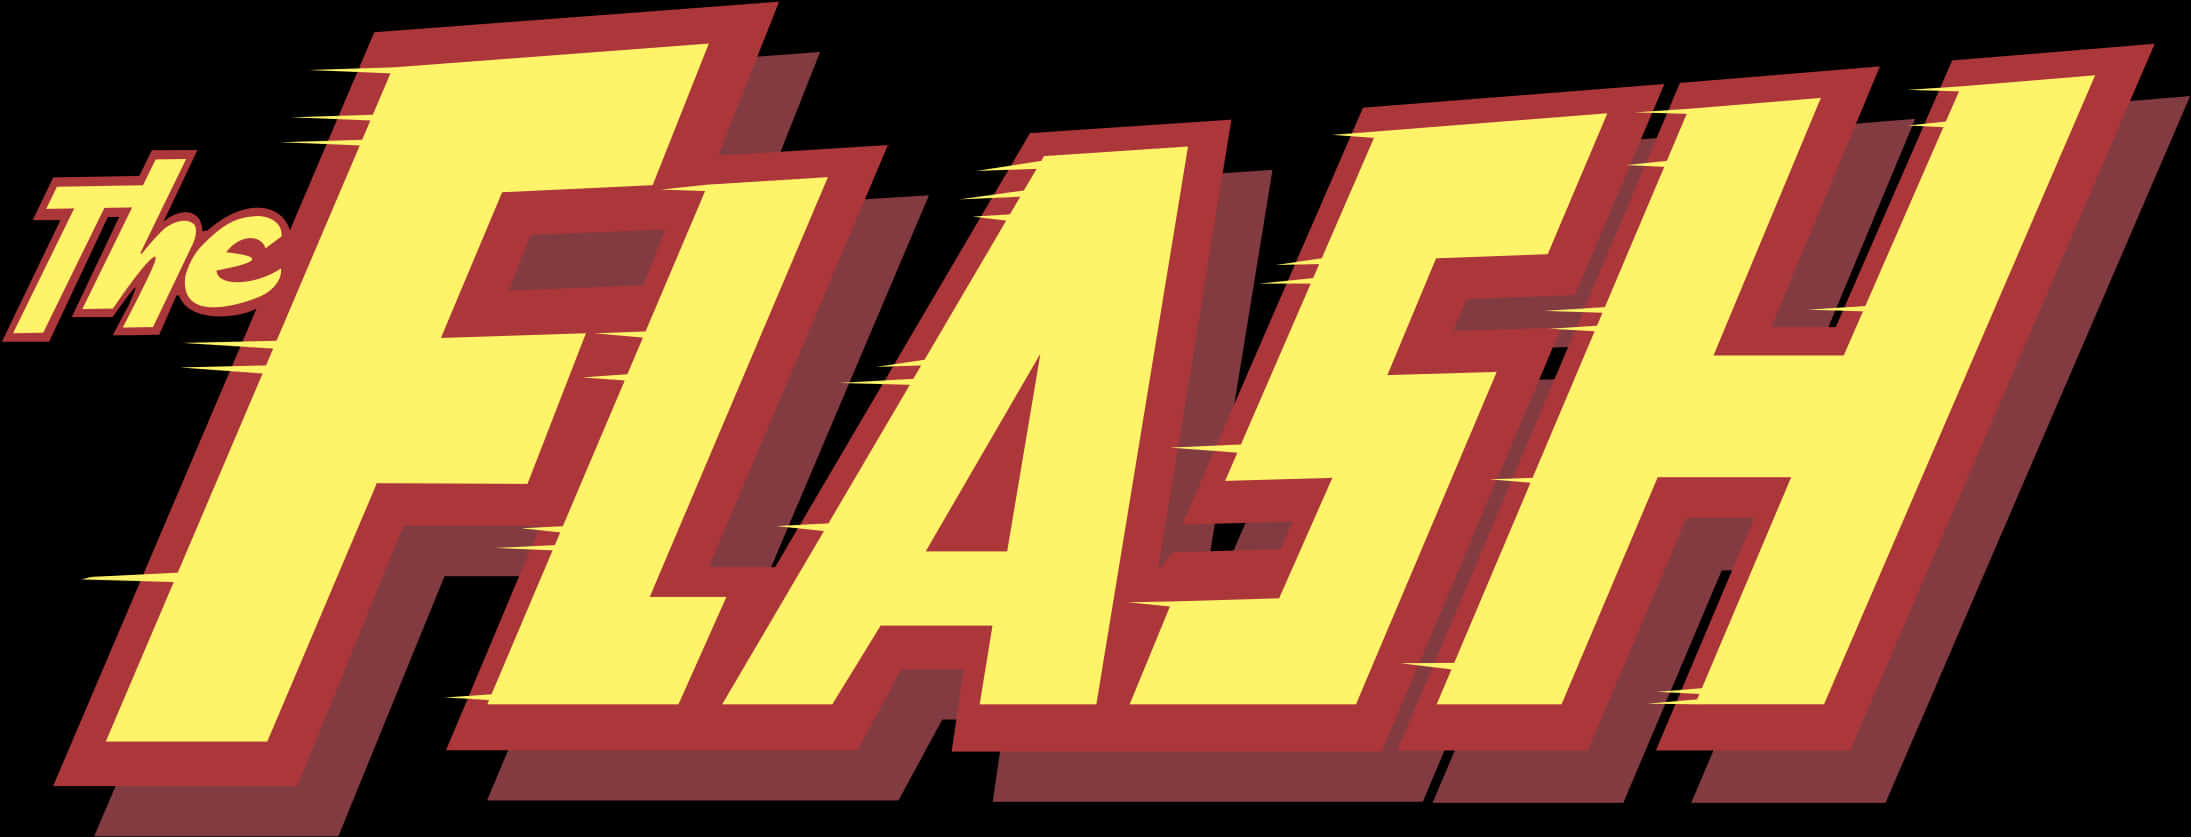 The Flash Logo Graphic